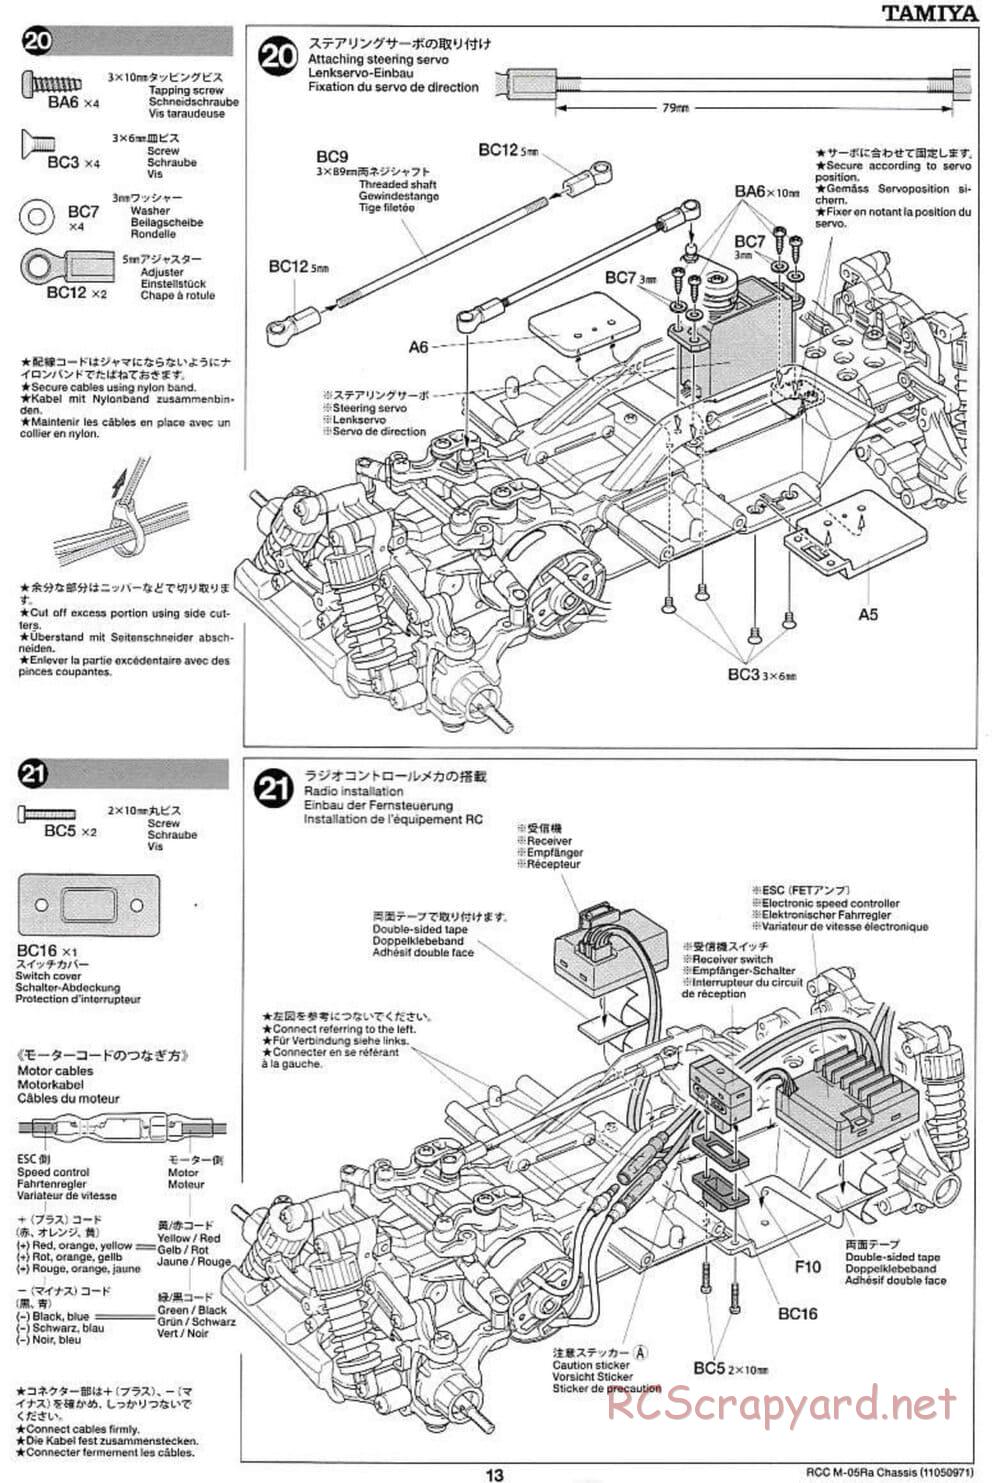 Tamiya - M-05Ra Chassis - Manual - Page 13